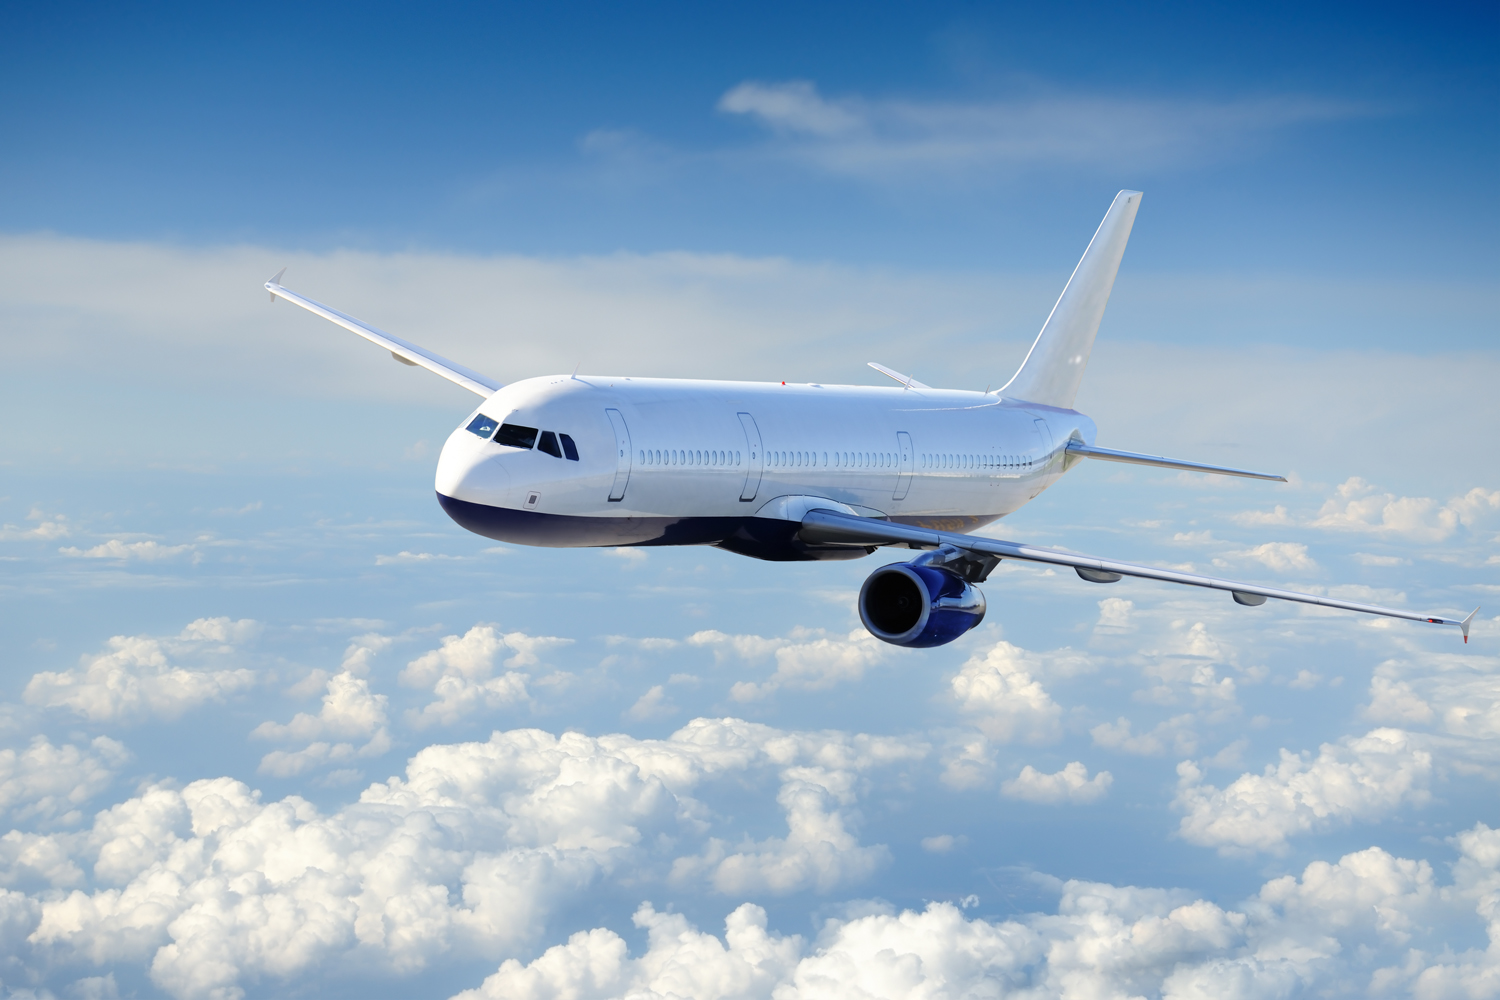 Kazakhstan ranks second in ensuring flights safety among CIS states